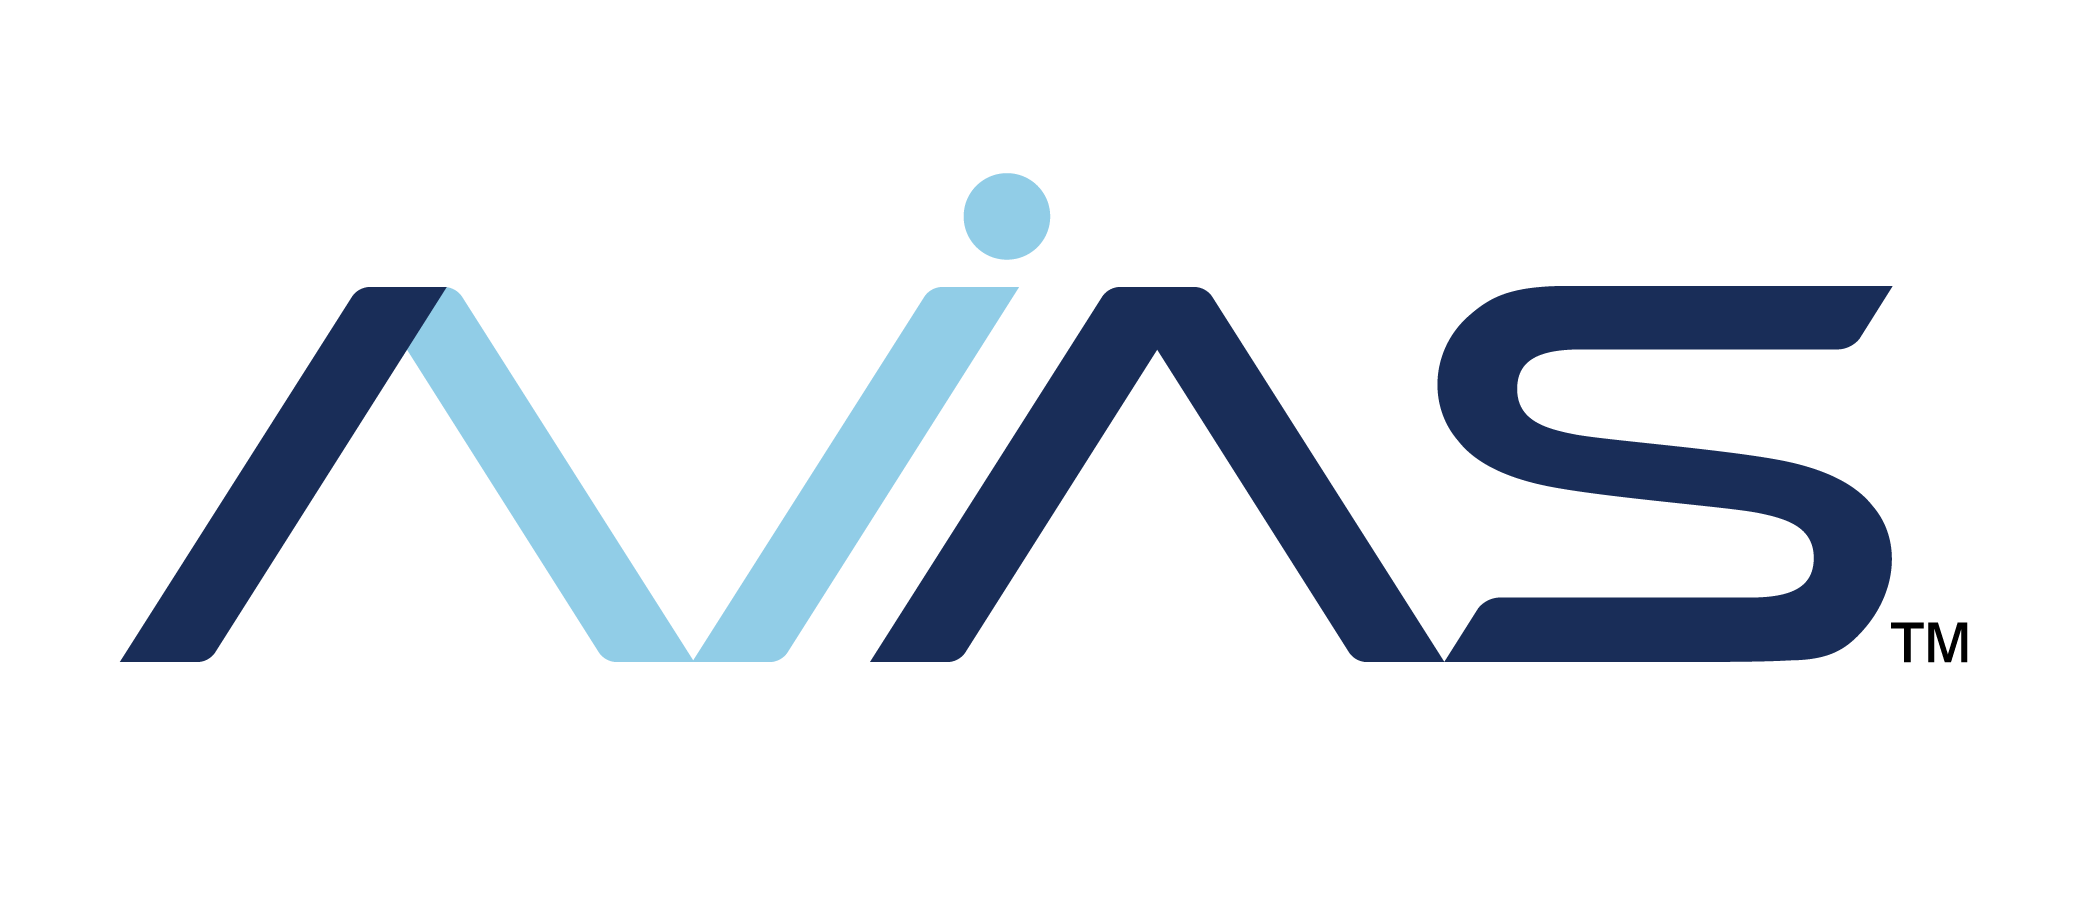 Avias Platform by InfraSolutions